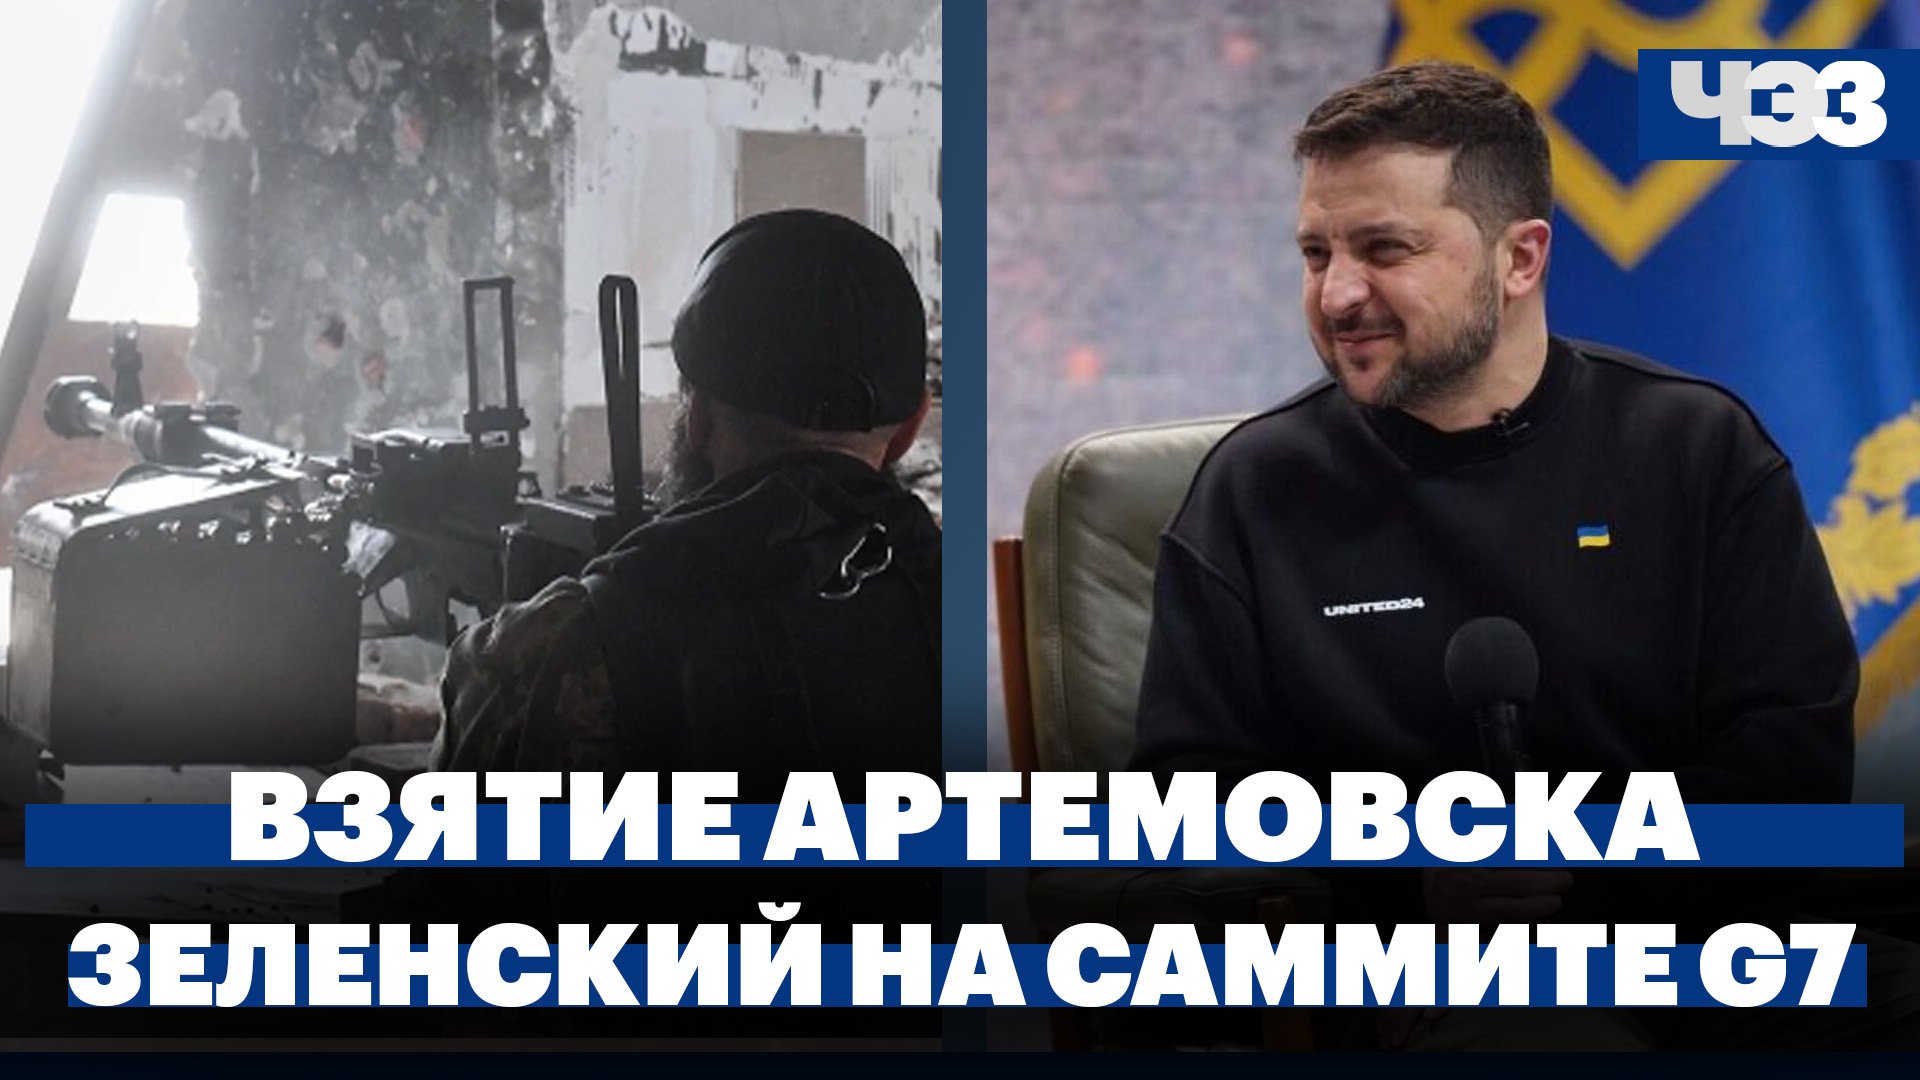 Пригожин объявил о взятии Артемовска. Макрон - о  возможностях для Зеленского на саммите G7